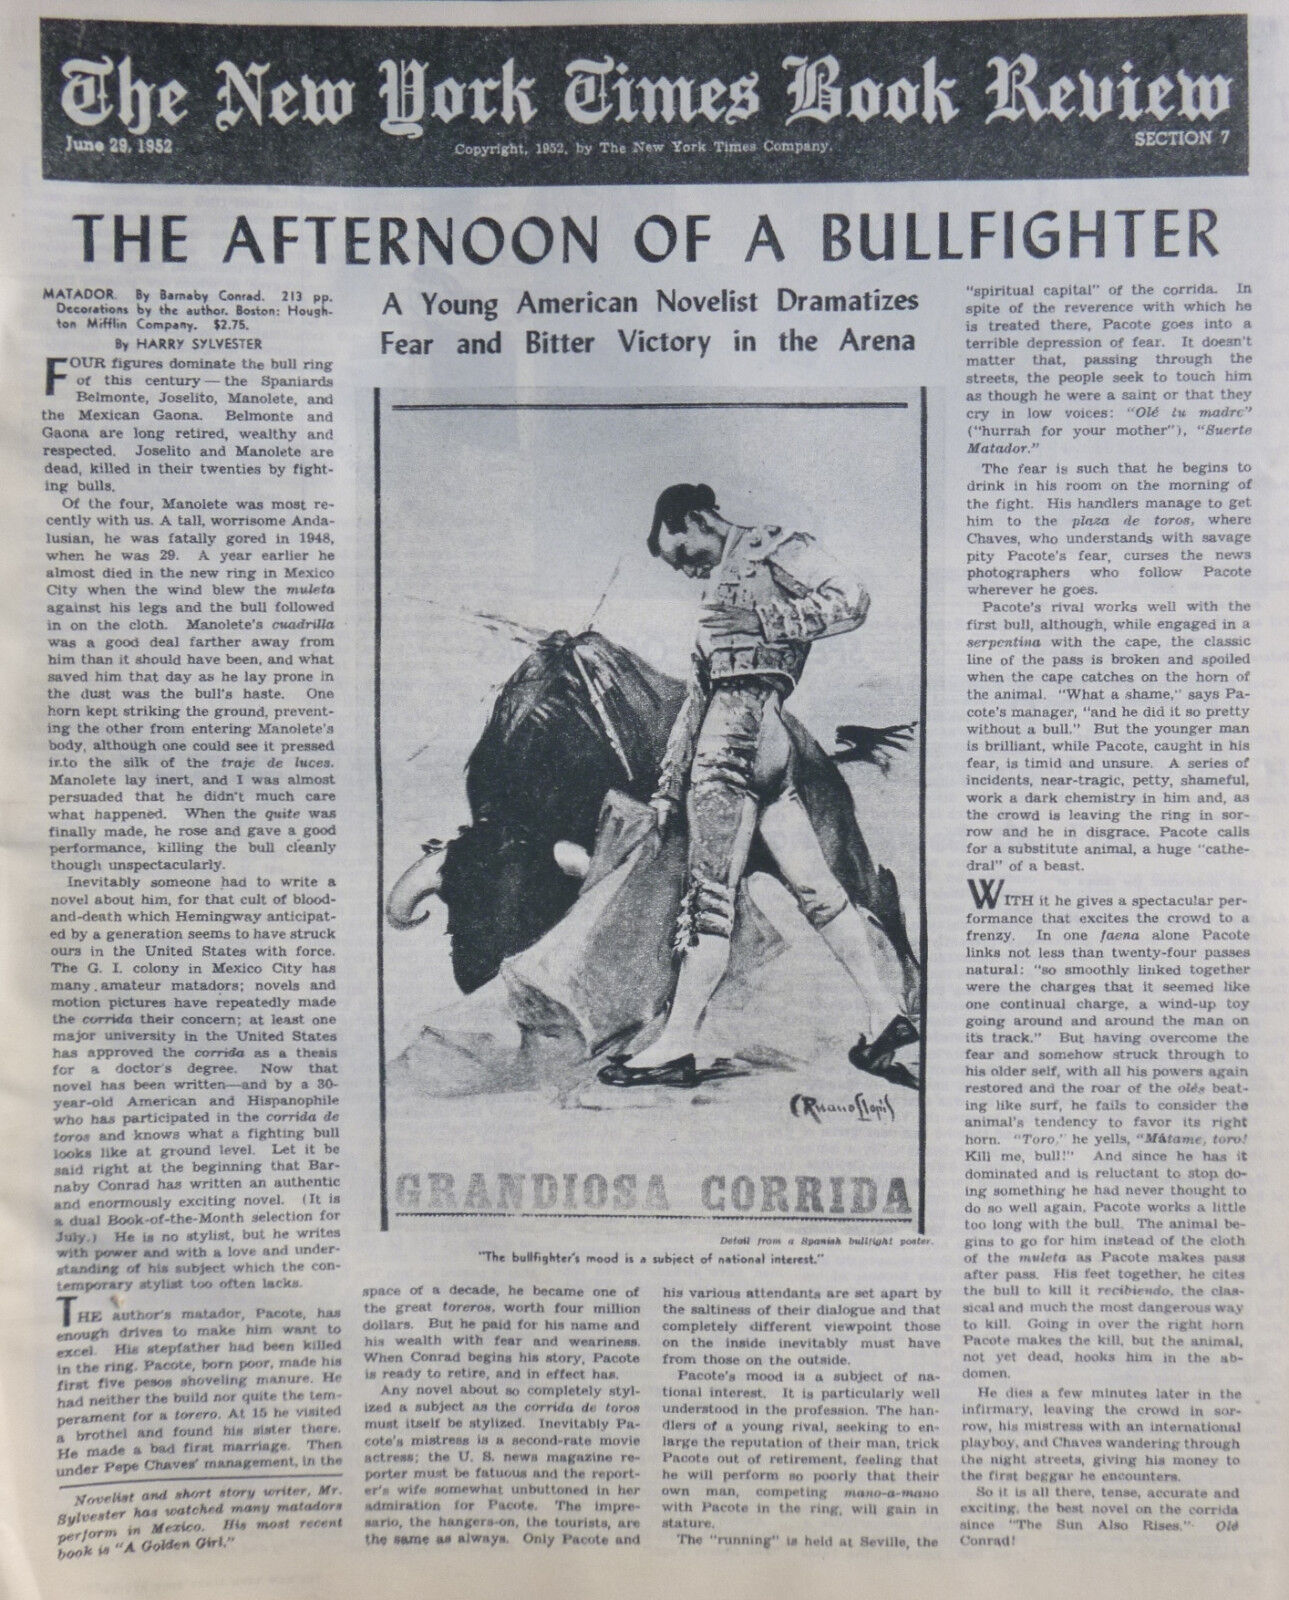 MATADOR CONRAD GRANDIOSA CORRIDA SYLVESTER 1952 June 29 NY Times Book Review